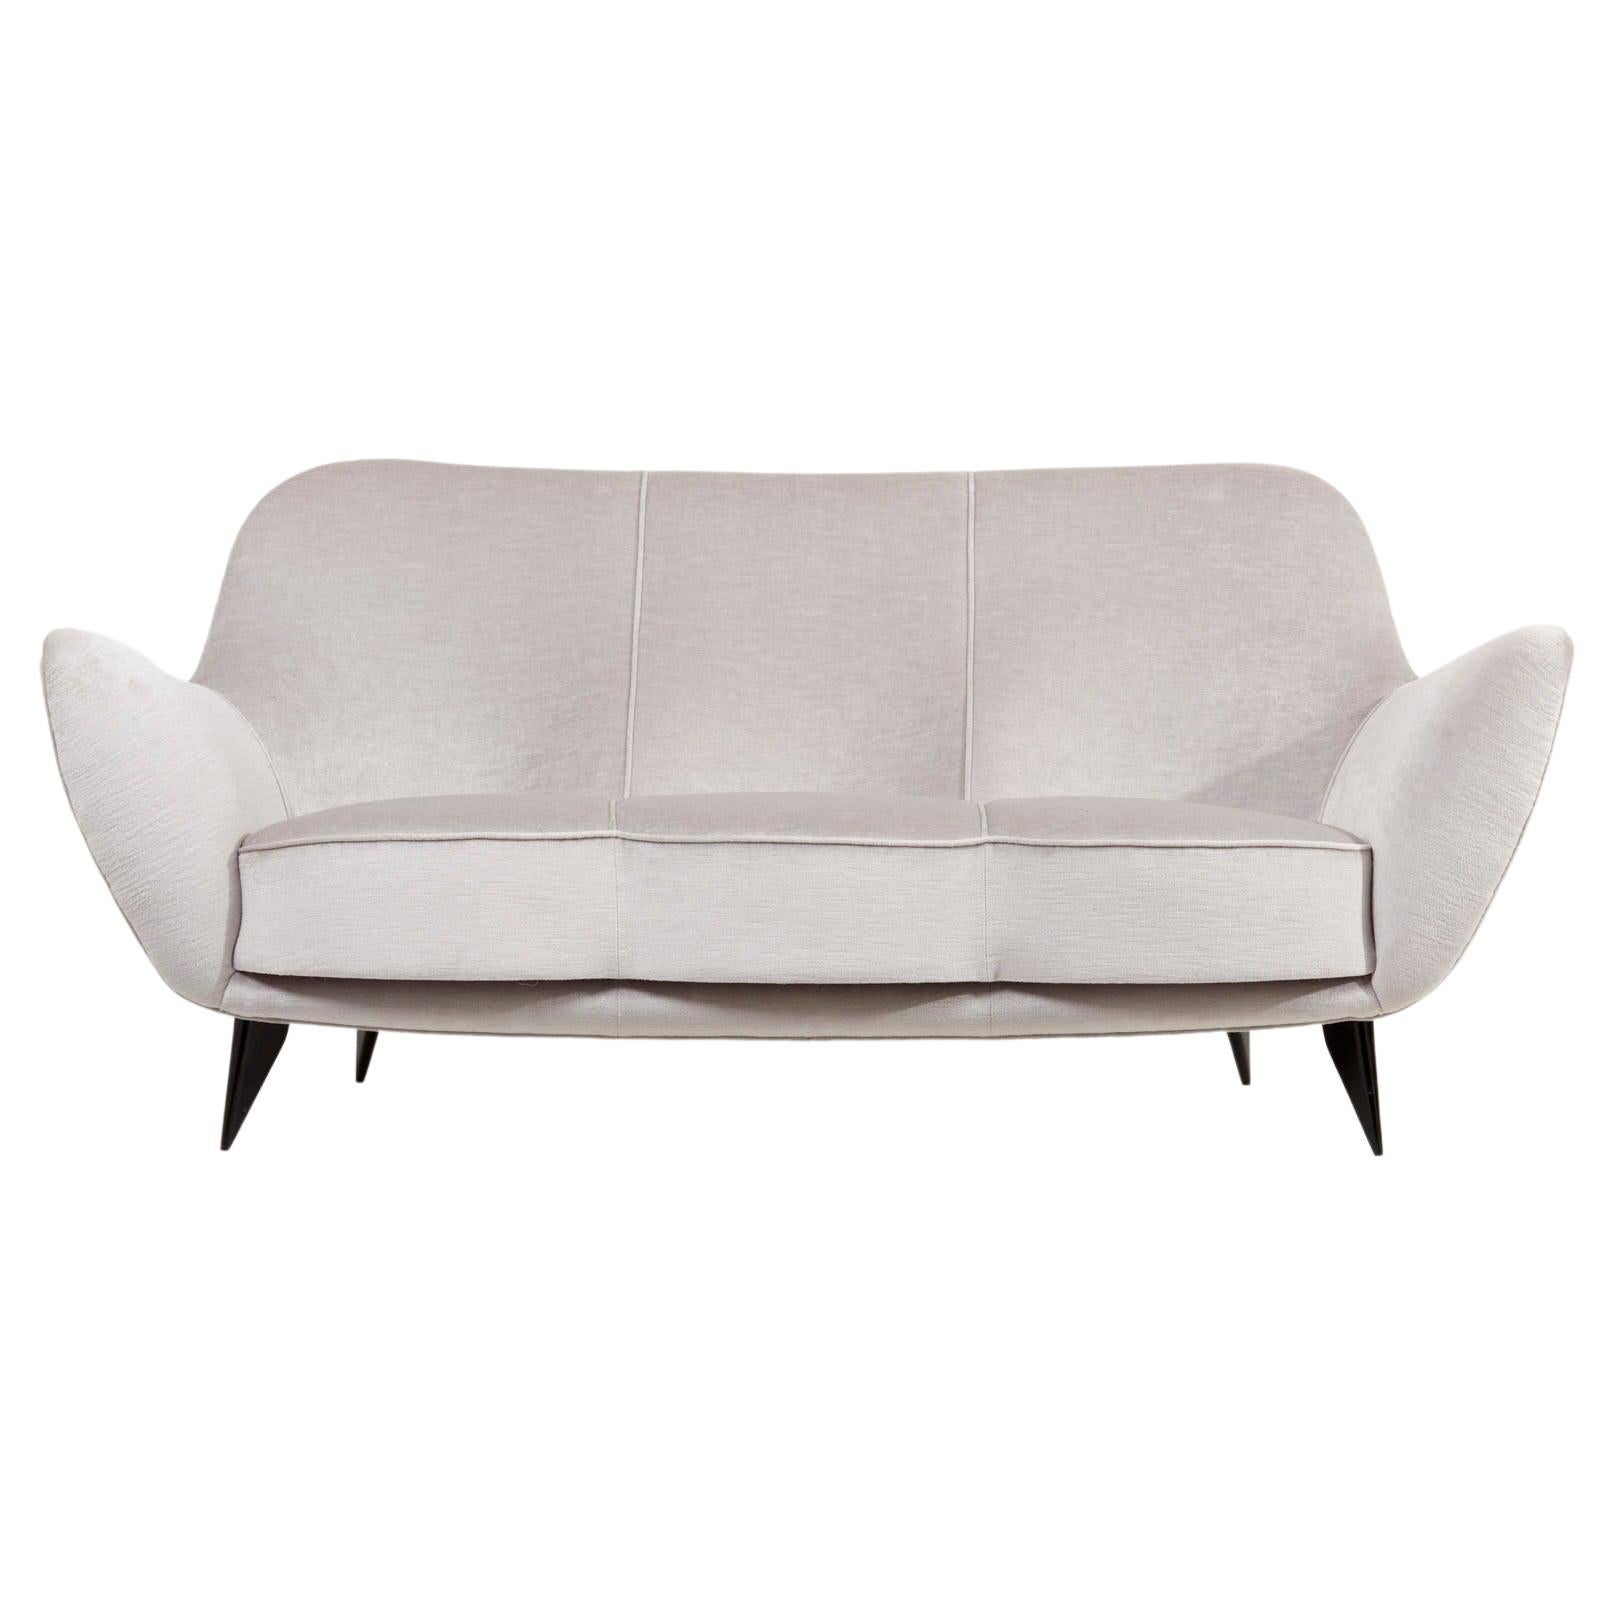 Sofa by Guglielmo Veronesi for ISA Bergamo in Silver / Light Gray, Italy, 1950s